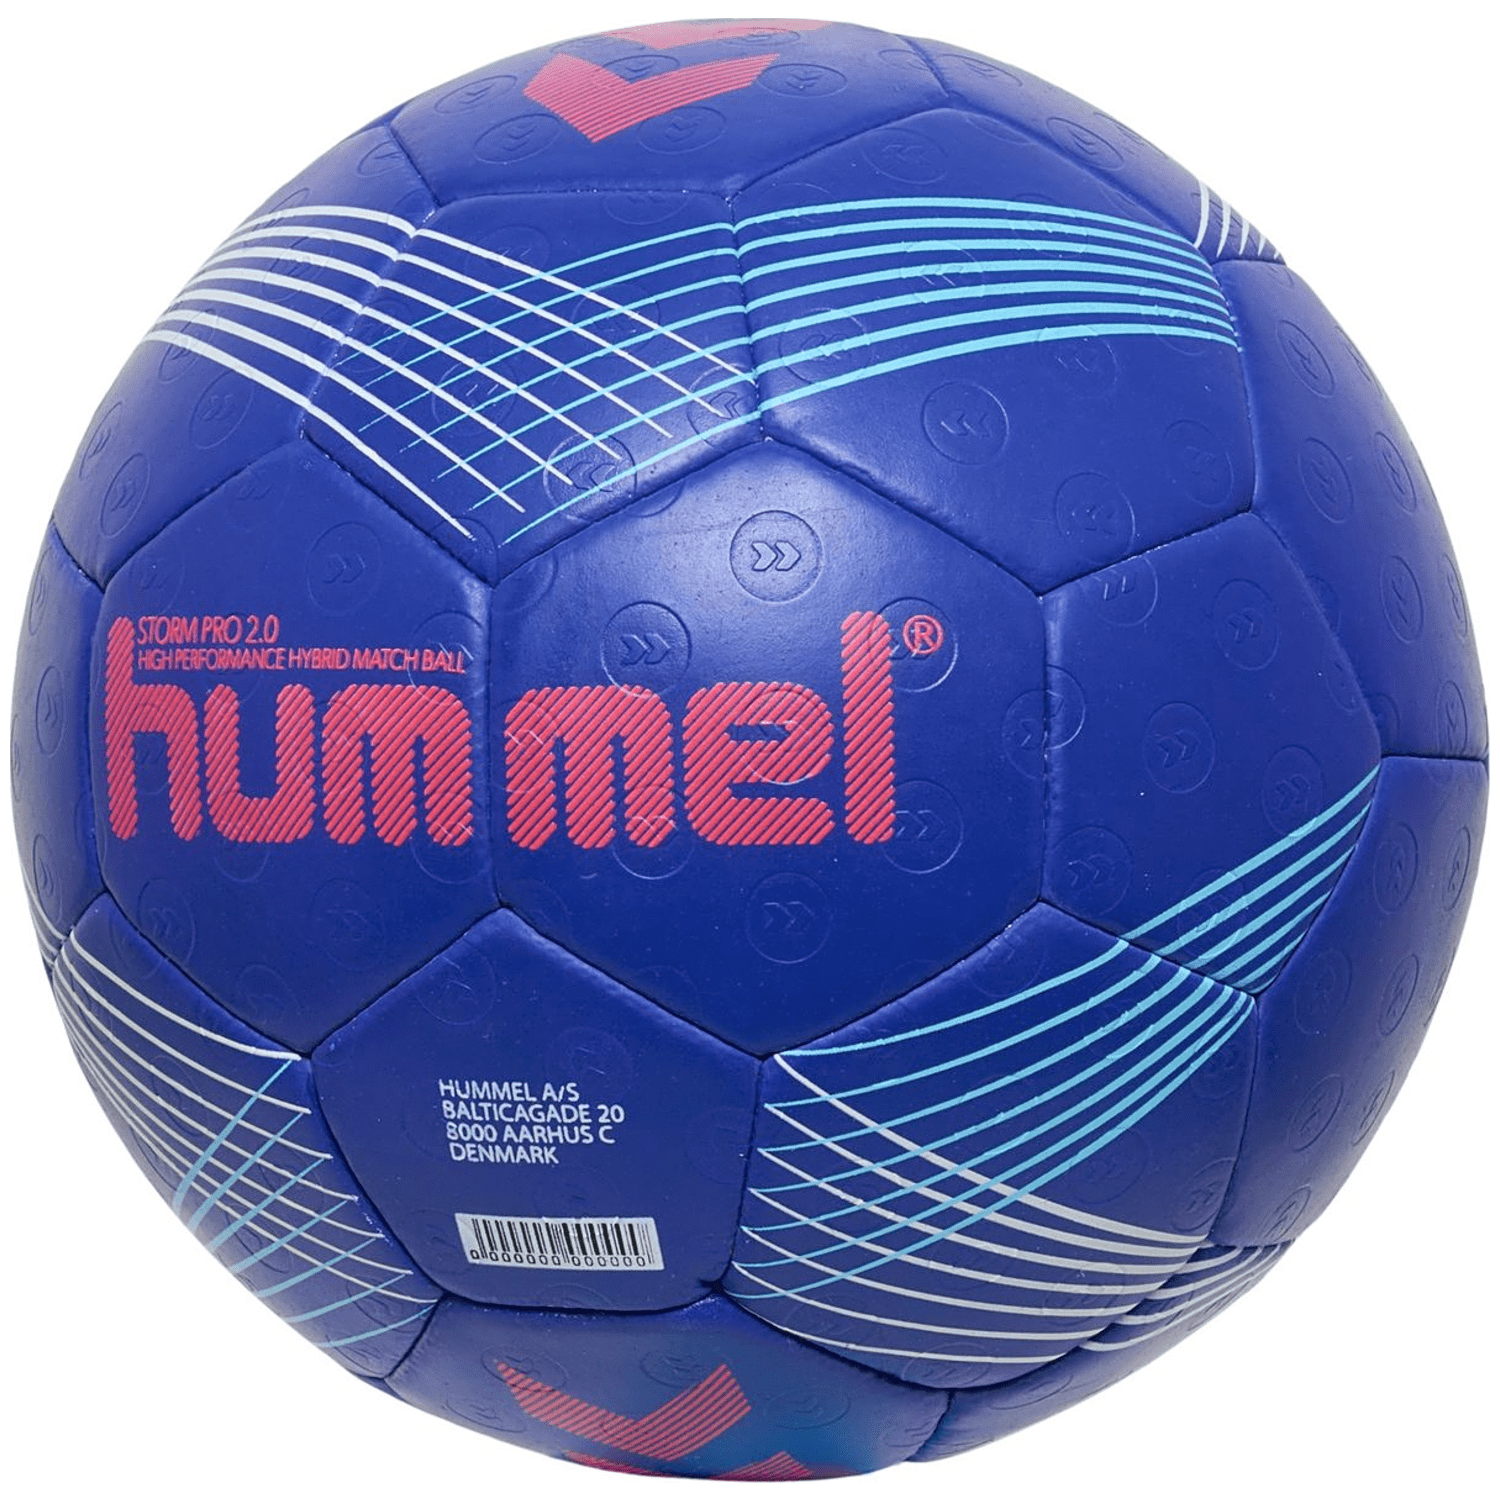 Hummel Storm Pro 2.0 HB Handball